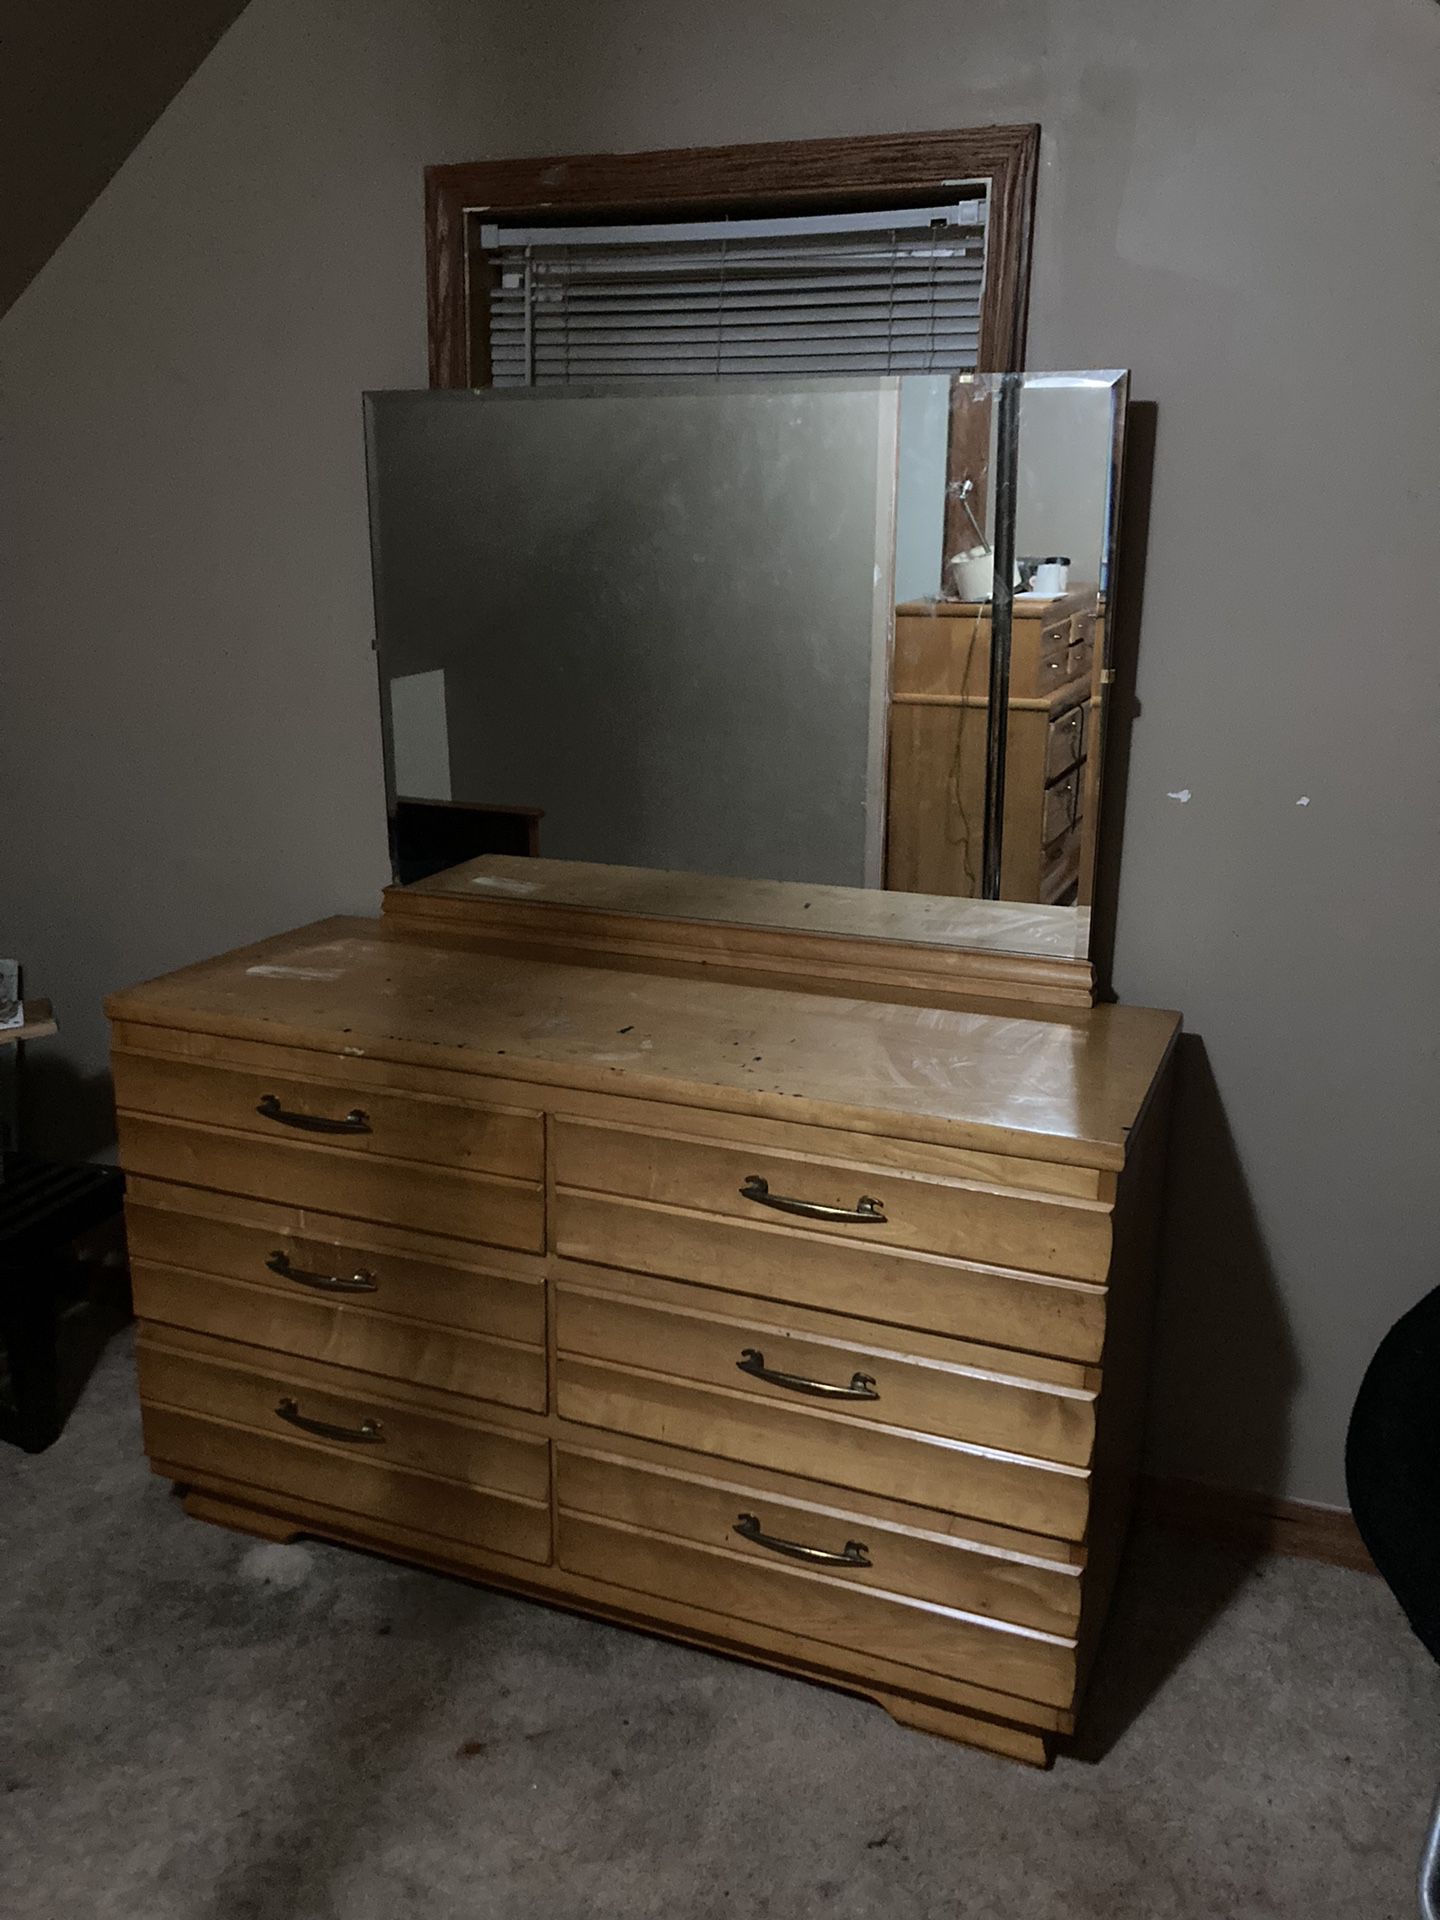 6 Drawer Dresser With Vanity Mirror